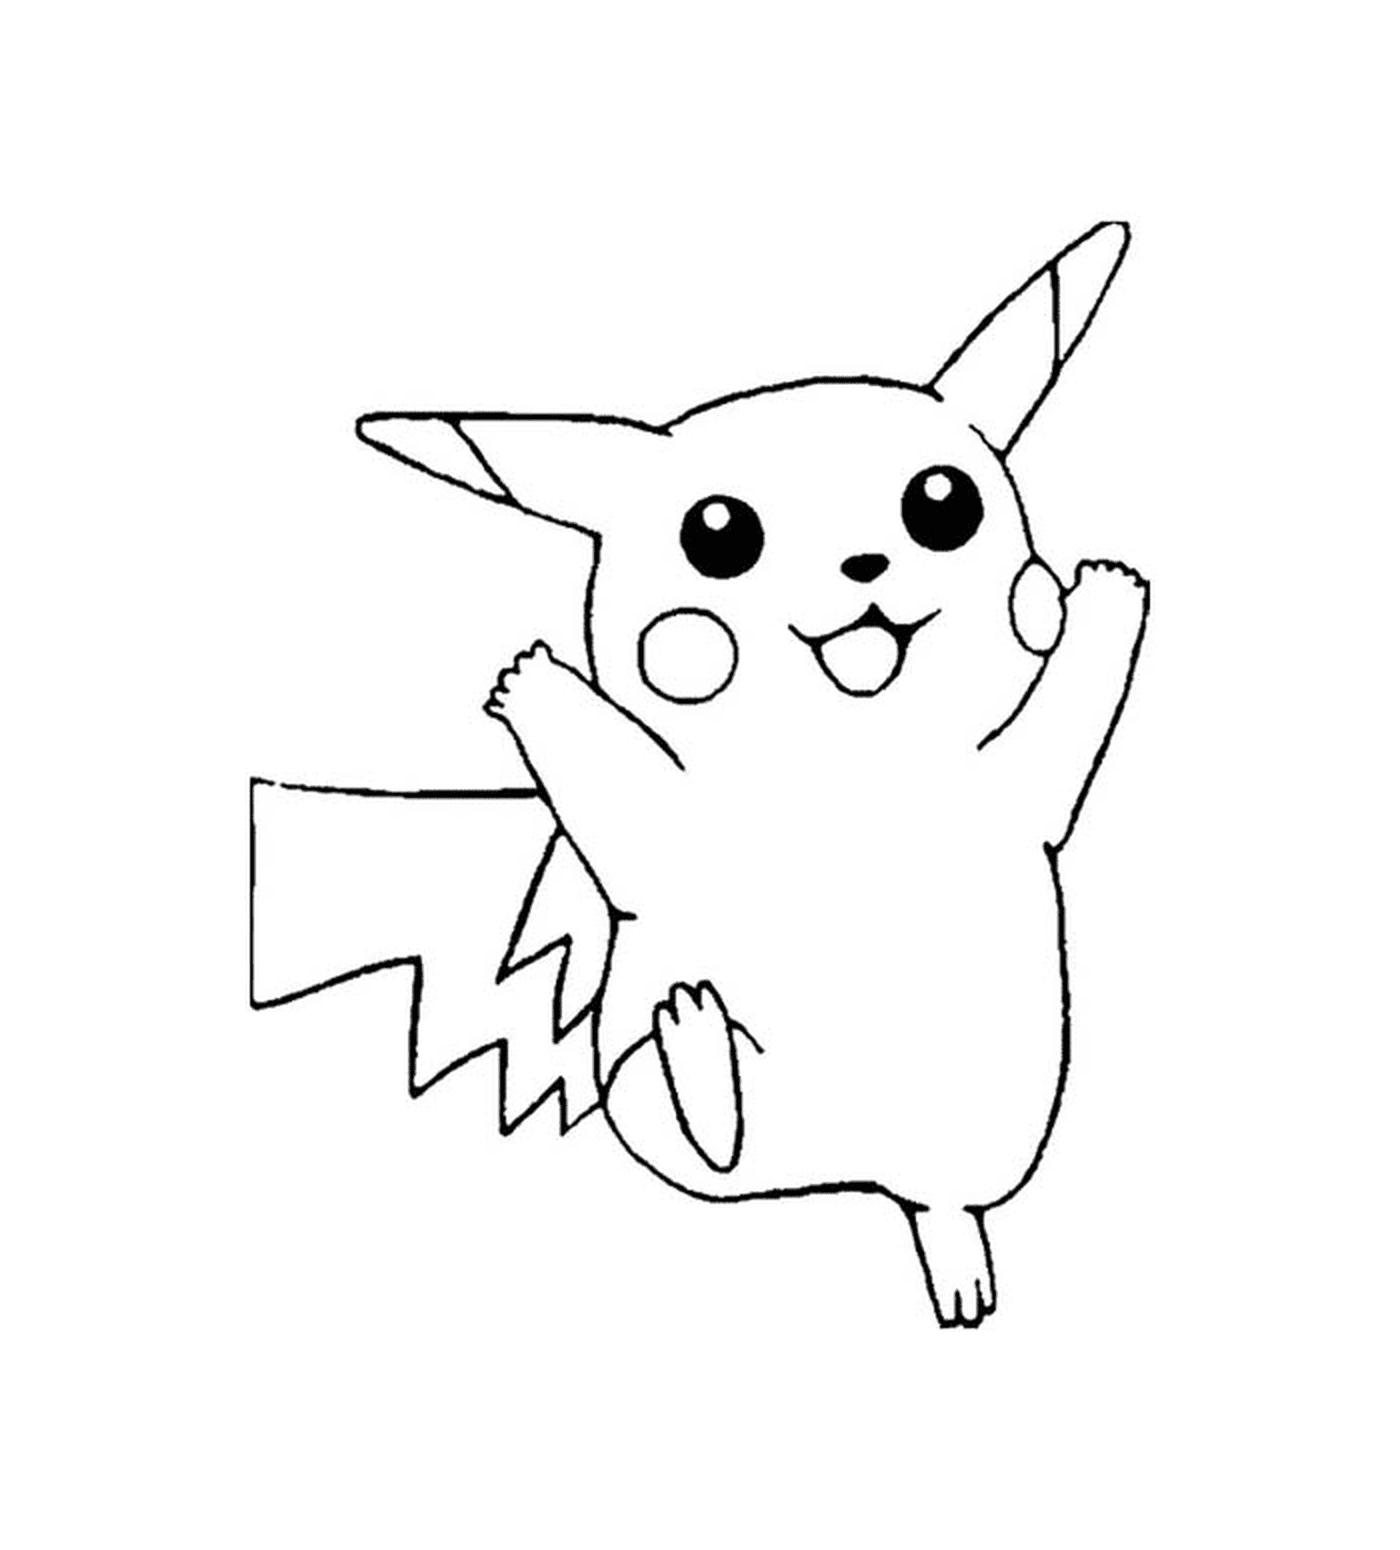  Pikachu, bonito e elétrico 